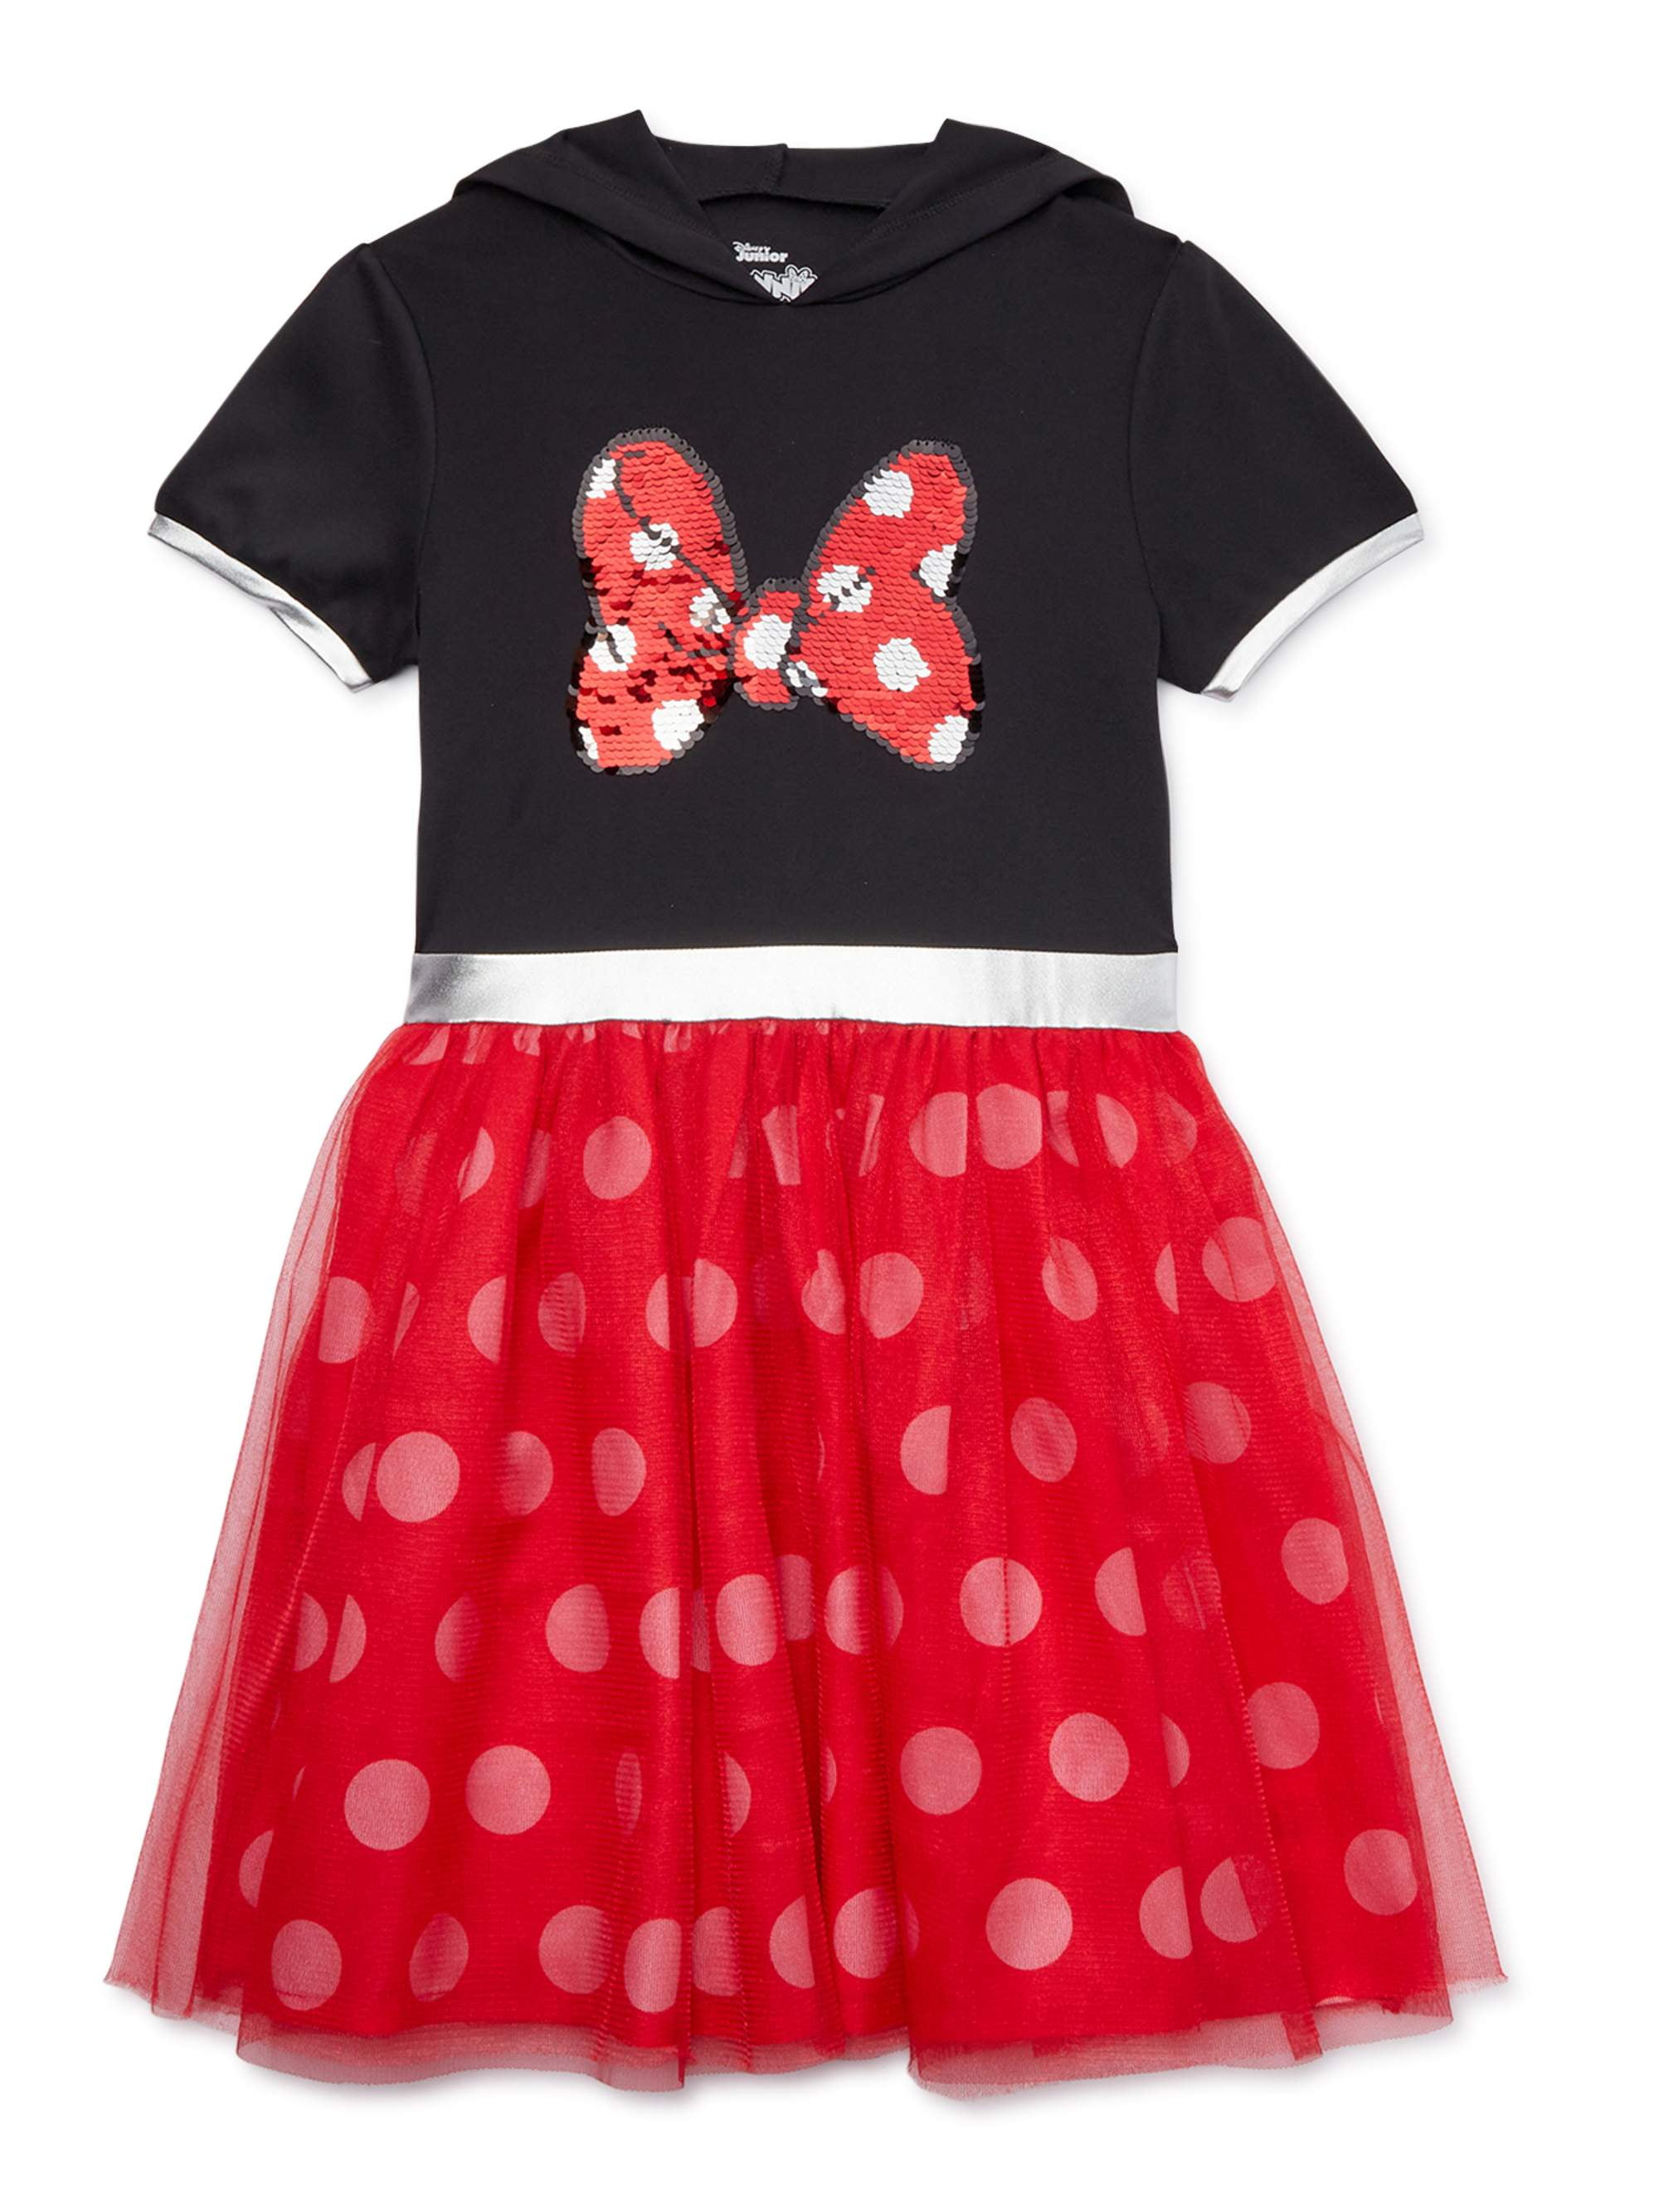 Minnie Mouse Puffy Sleeve Dress  Cakeworthy  Yella Brick Road